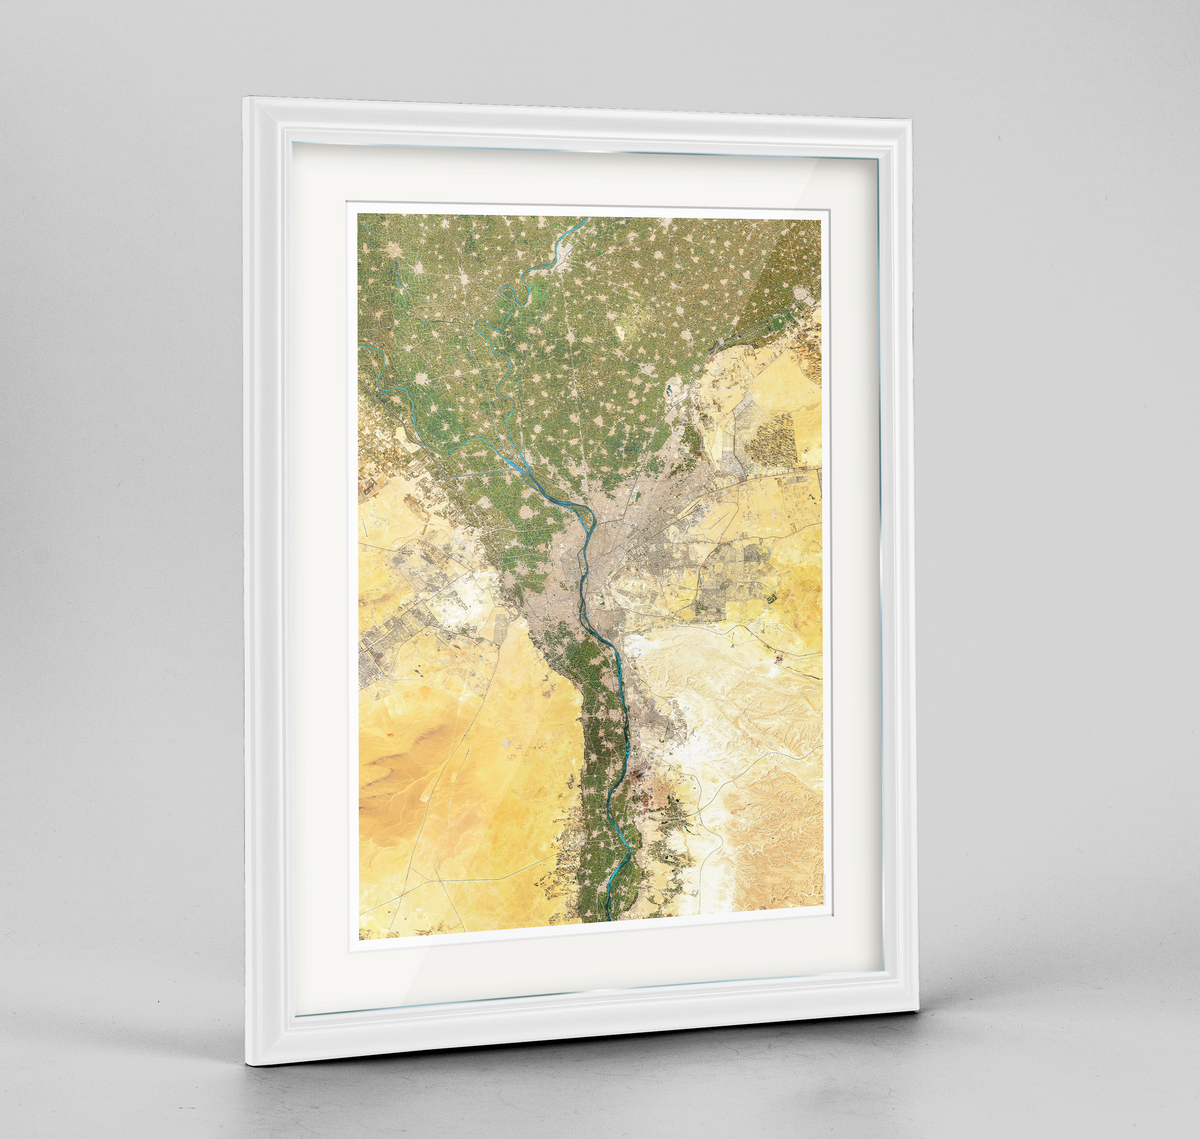 Nile River Earth Photography Art Print - Framed